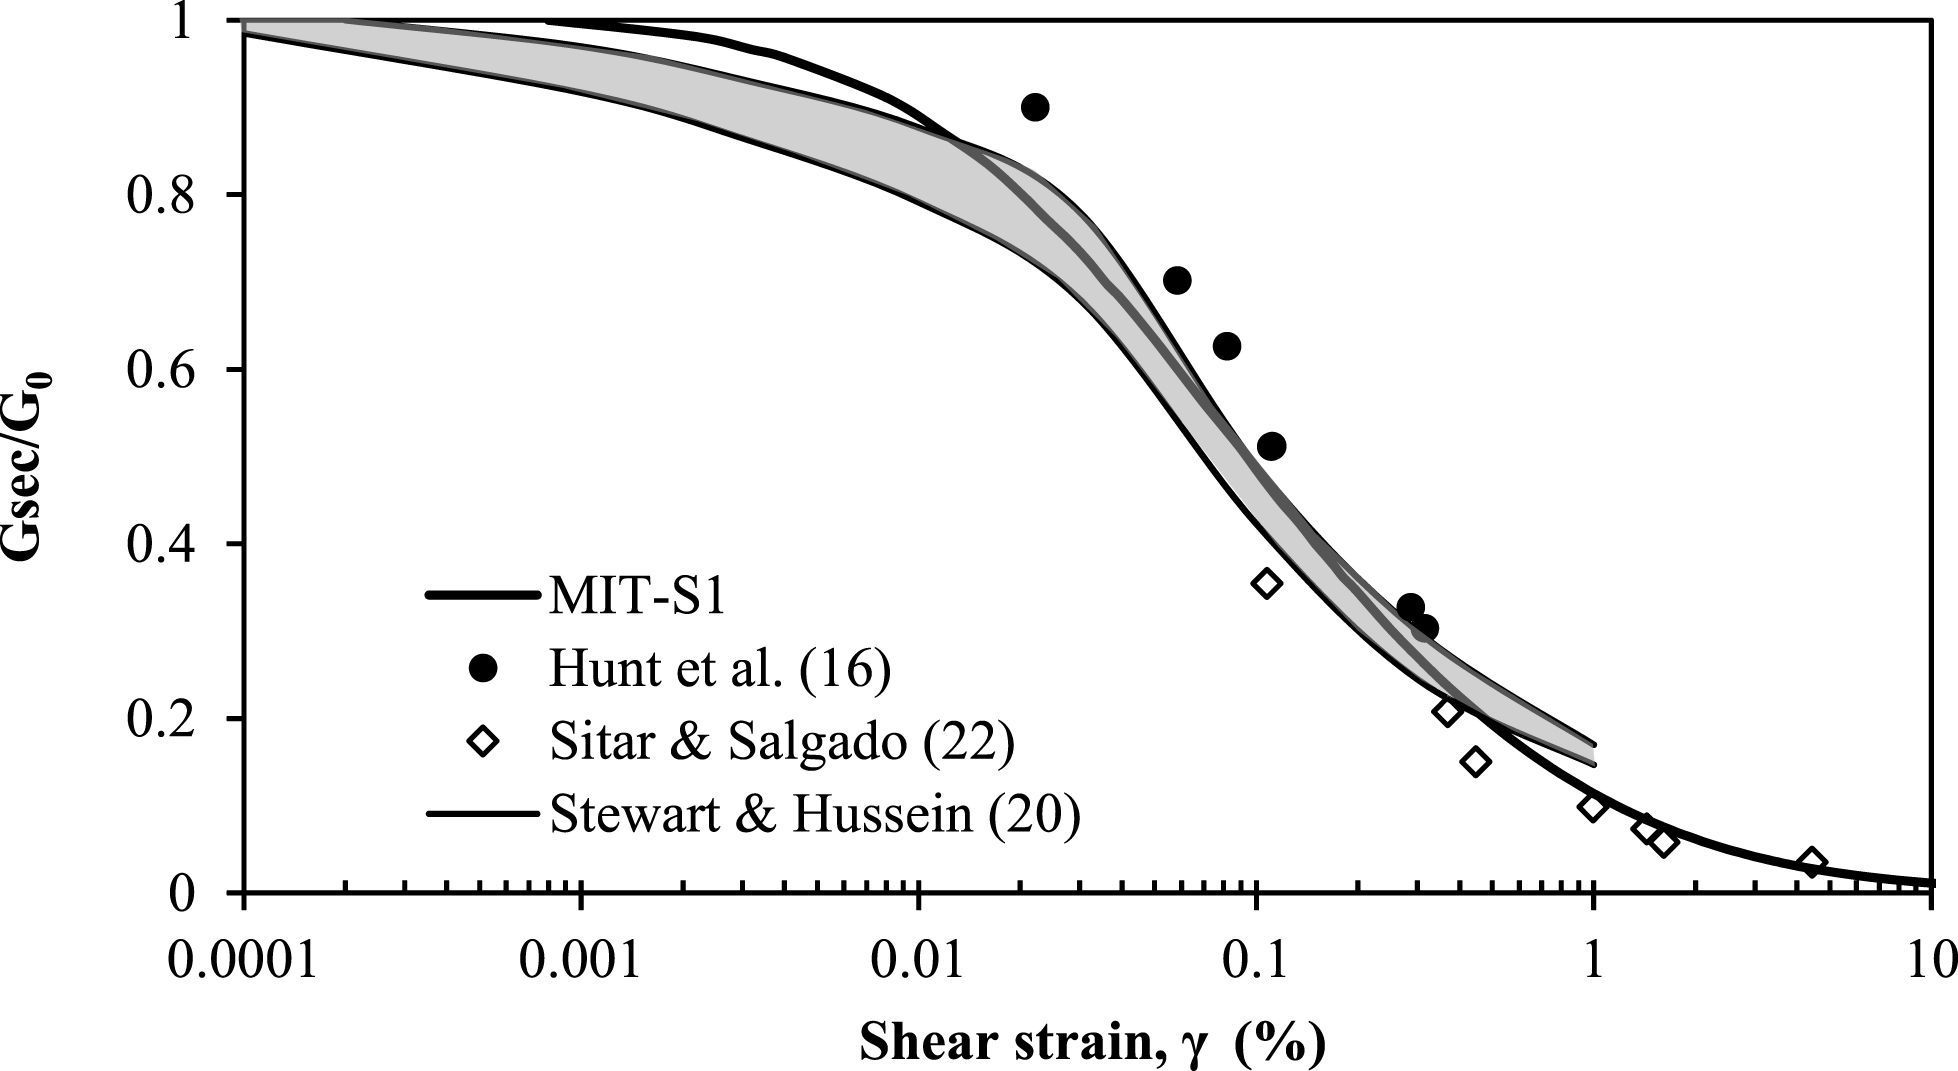 Determination of small strain non-linearity in shear.